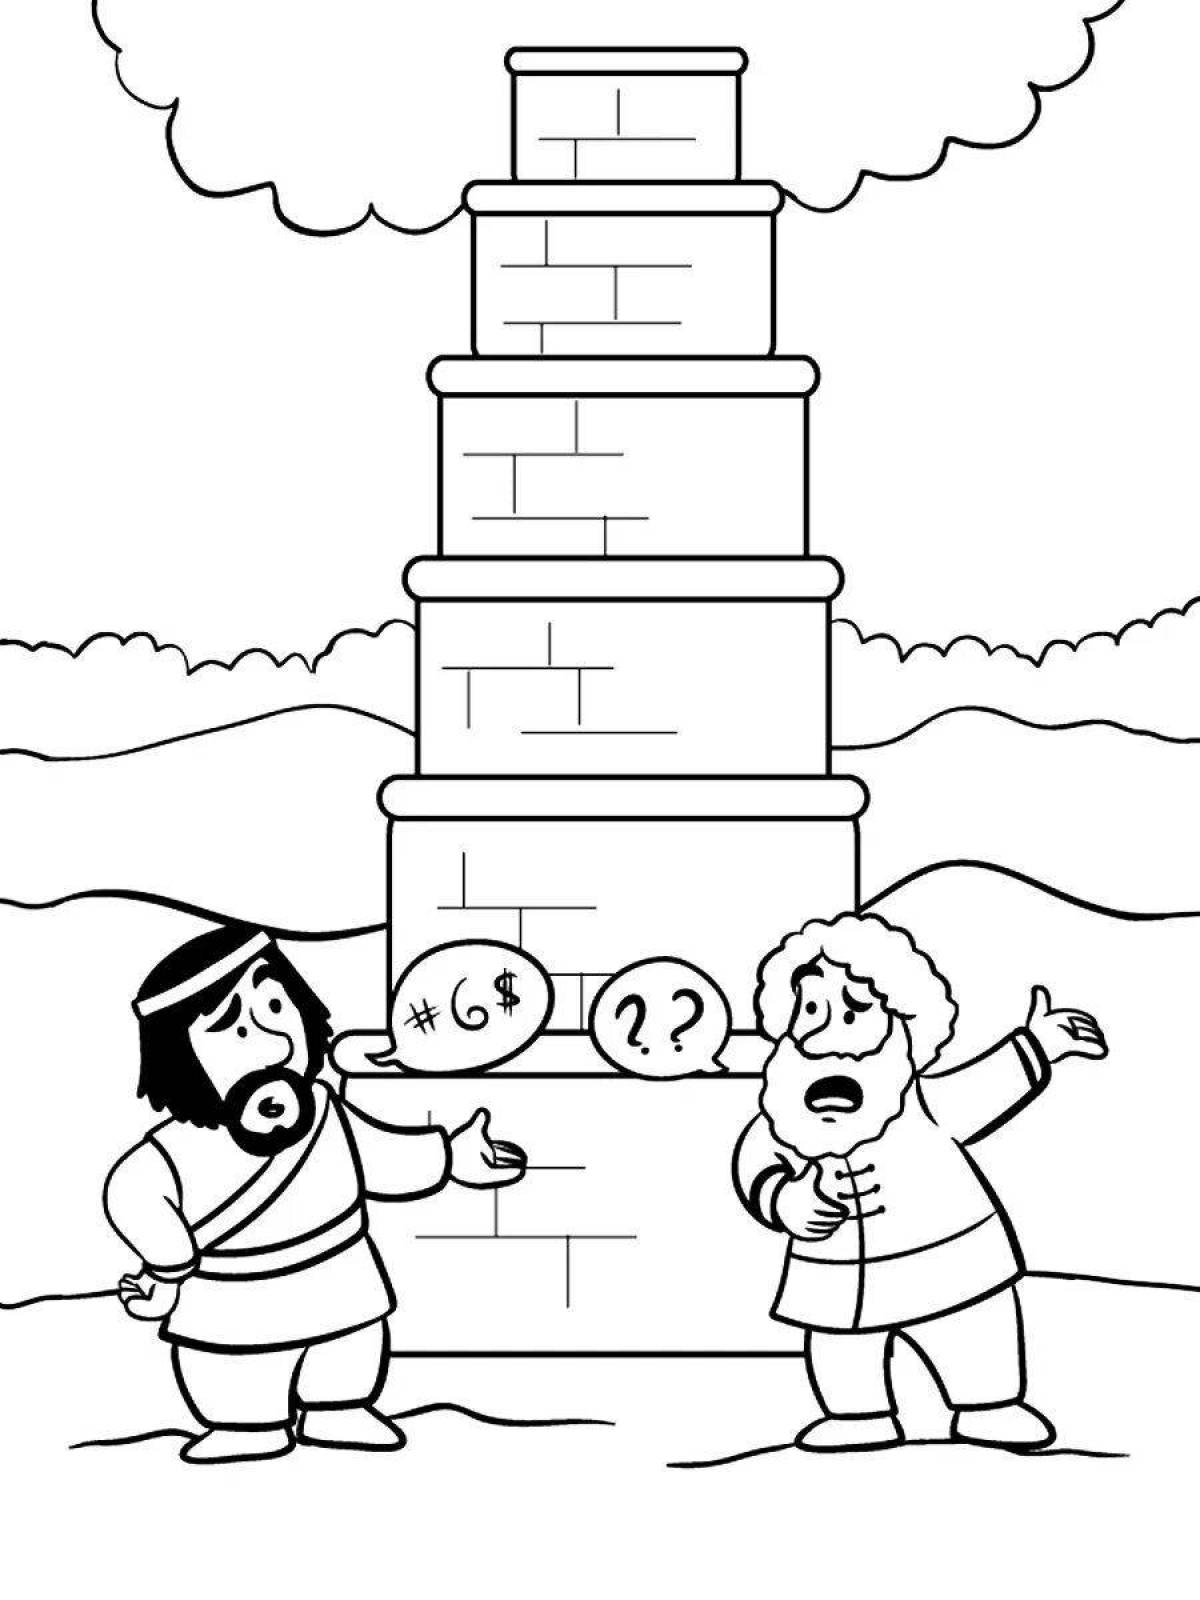 Generous tower of Babel coloring